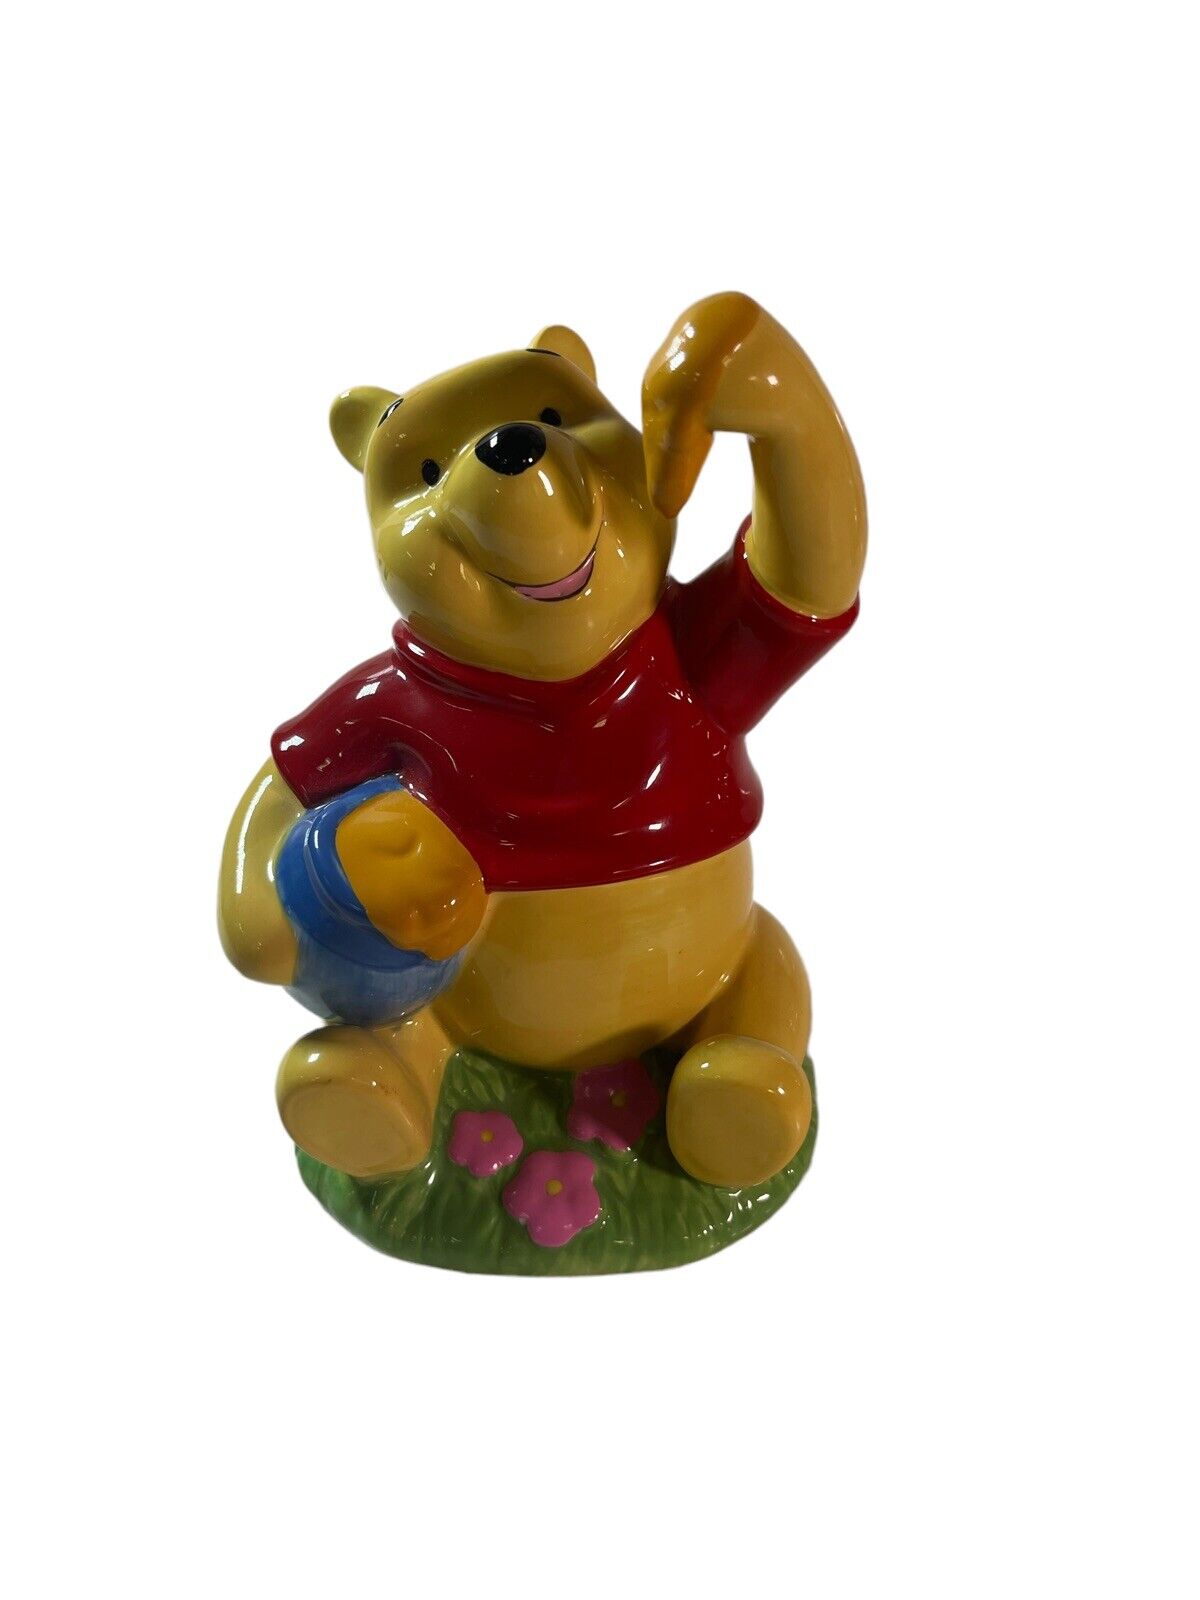 Vintage Disney Winnie The Pooh Ceramic Bank 8” Enesco Group Inc Cap Bottom Honey